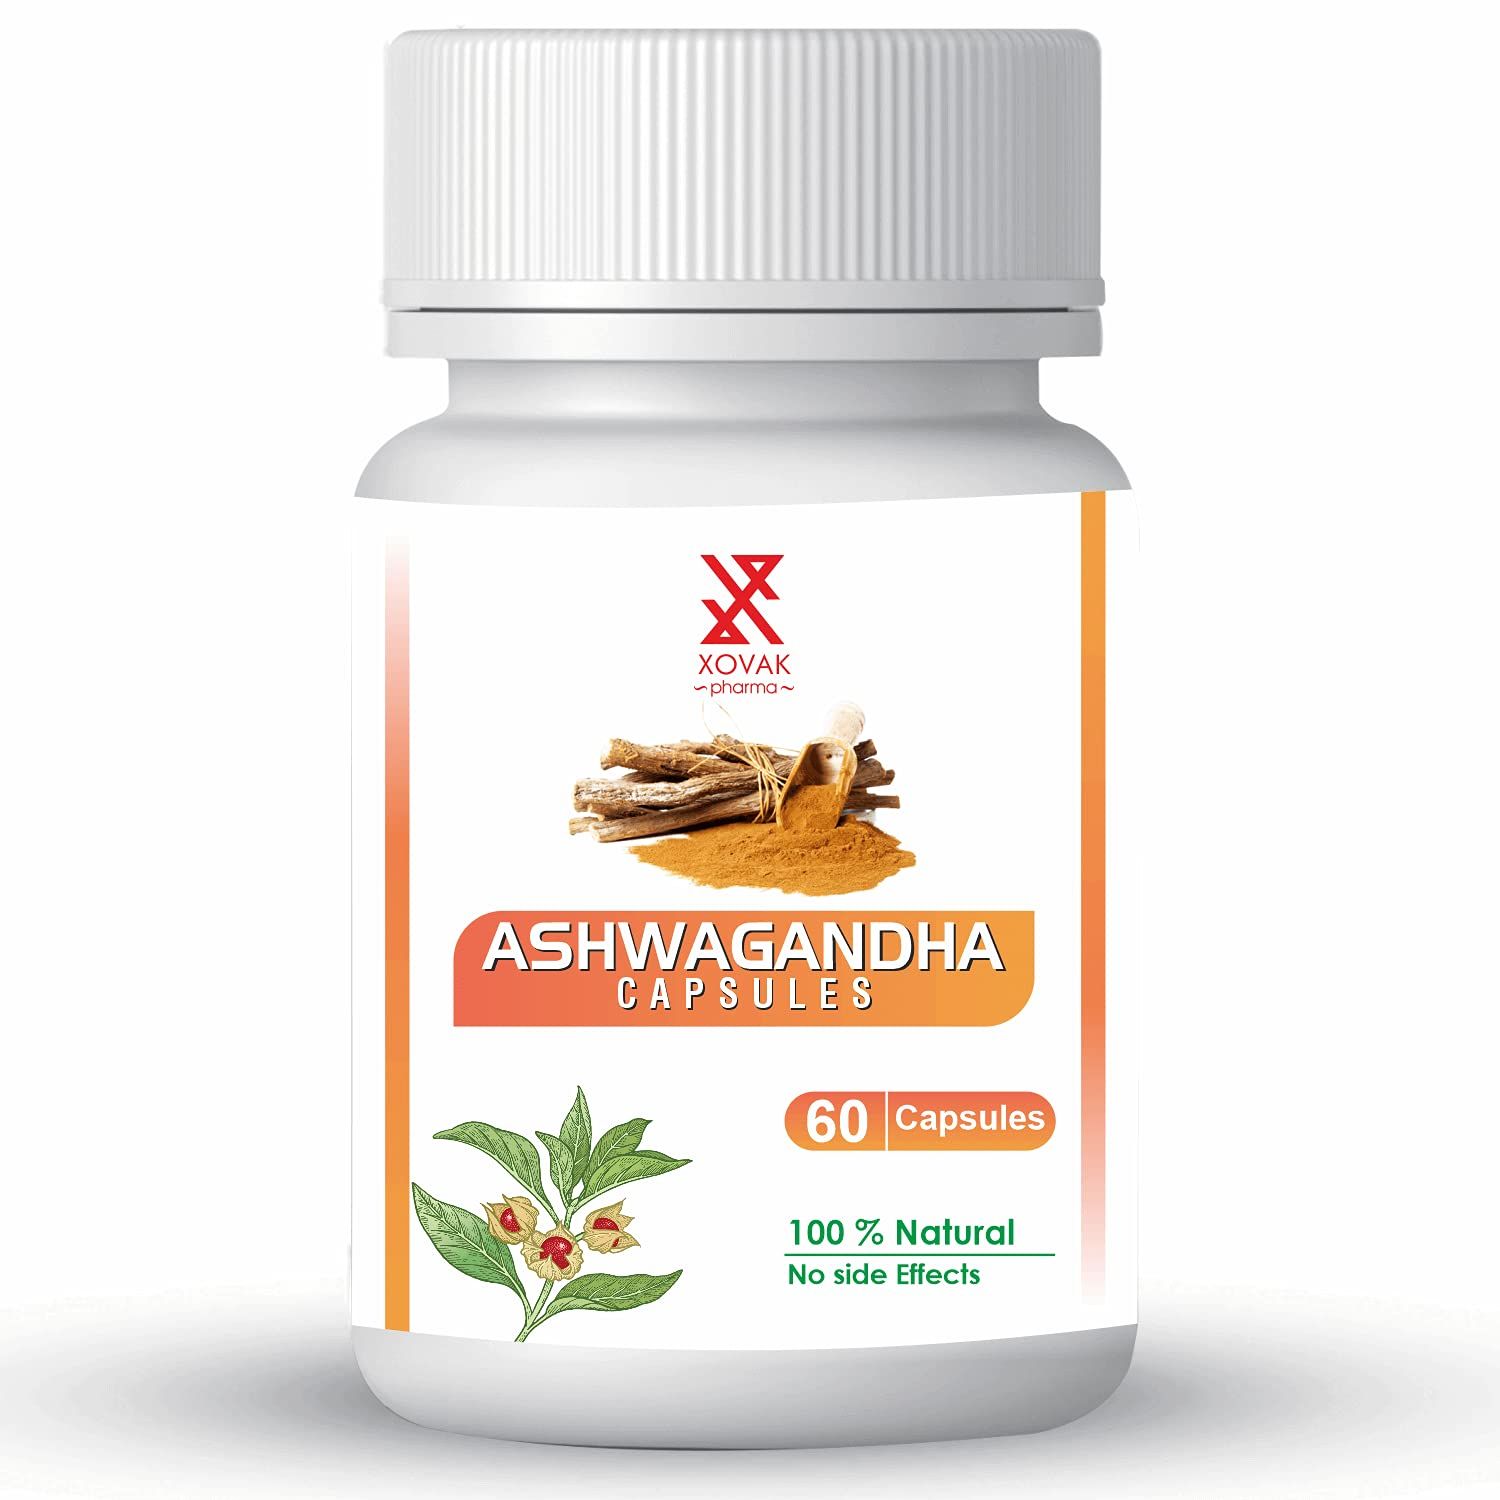 Xovak Pharma Organic Ashwagandha Capsules Image